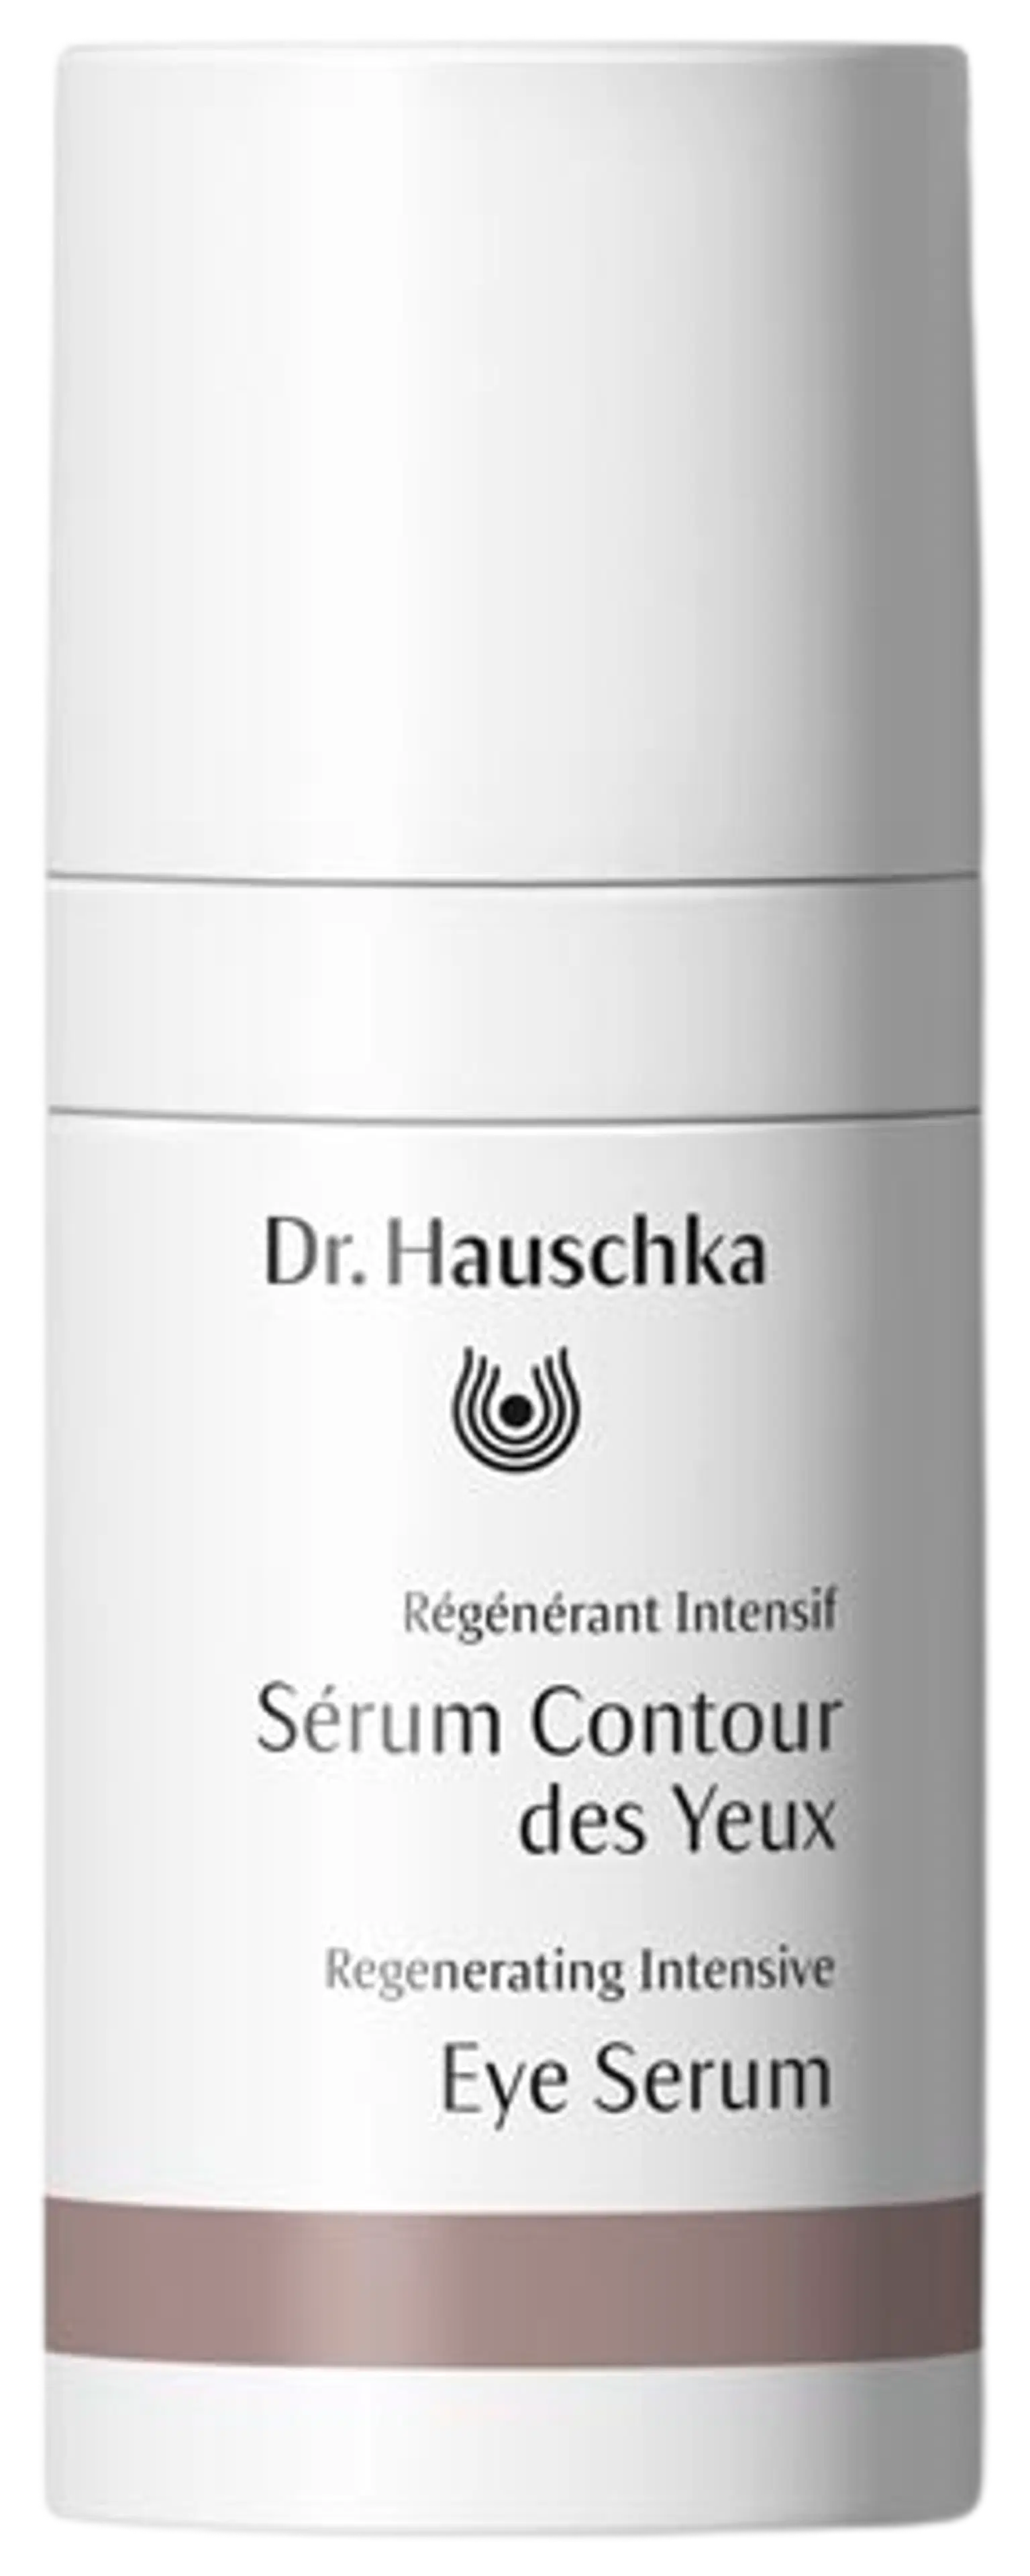 Dr. Hauschka Regenerating Intensive Eye Serum silmänympärysseerumi 15 ml